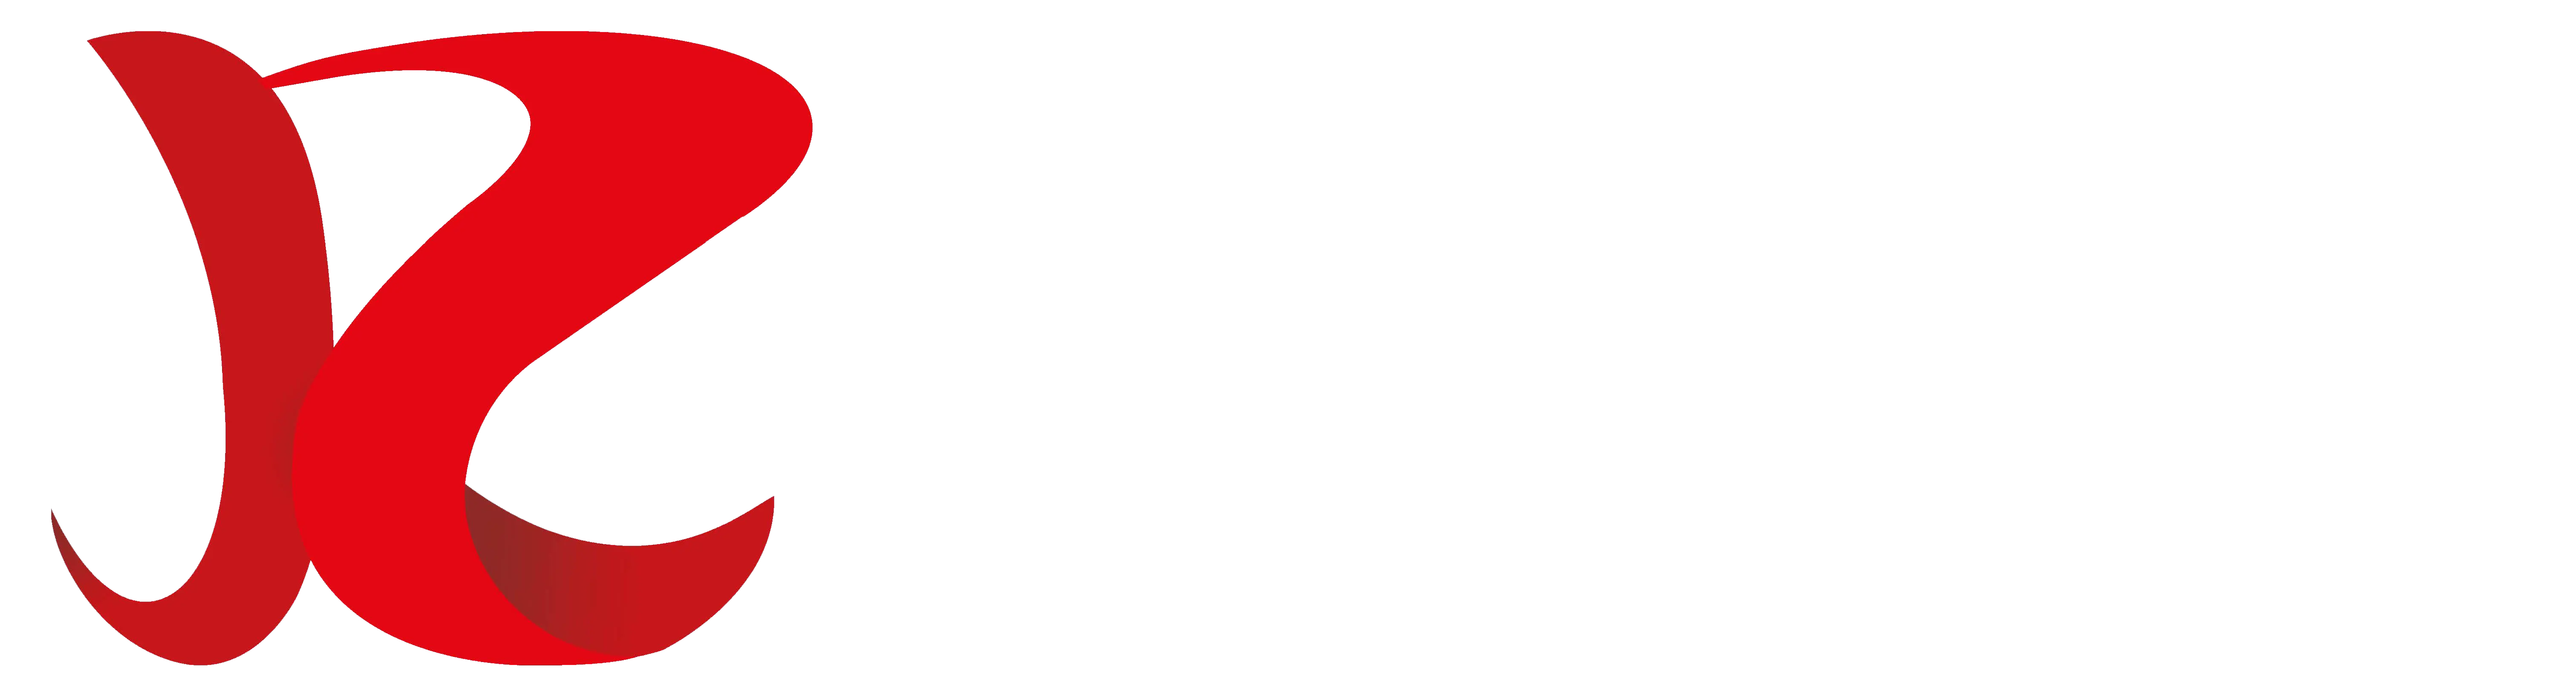 R-evolution training logo